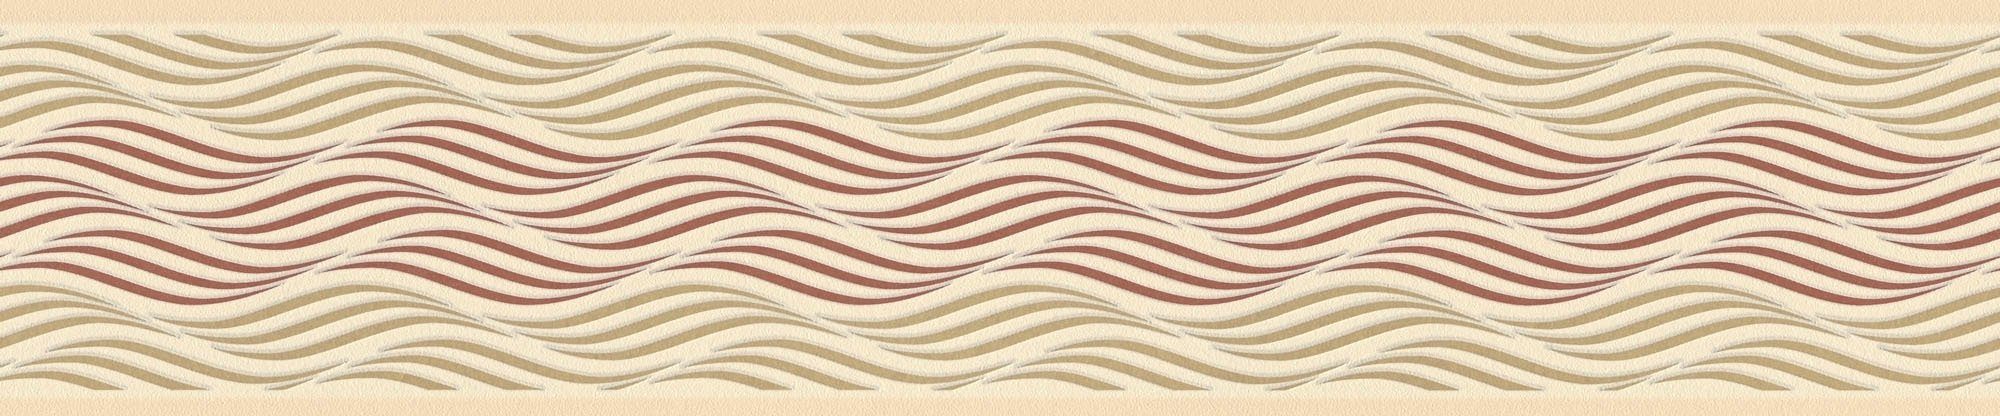 A.S. Création Bordüre Only abstrakt, beige/braun matt, Wellen strukturiert, Streifen, Bordüre Tapete Borders Metallic 11